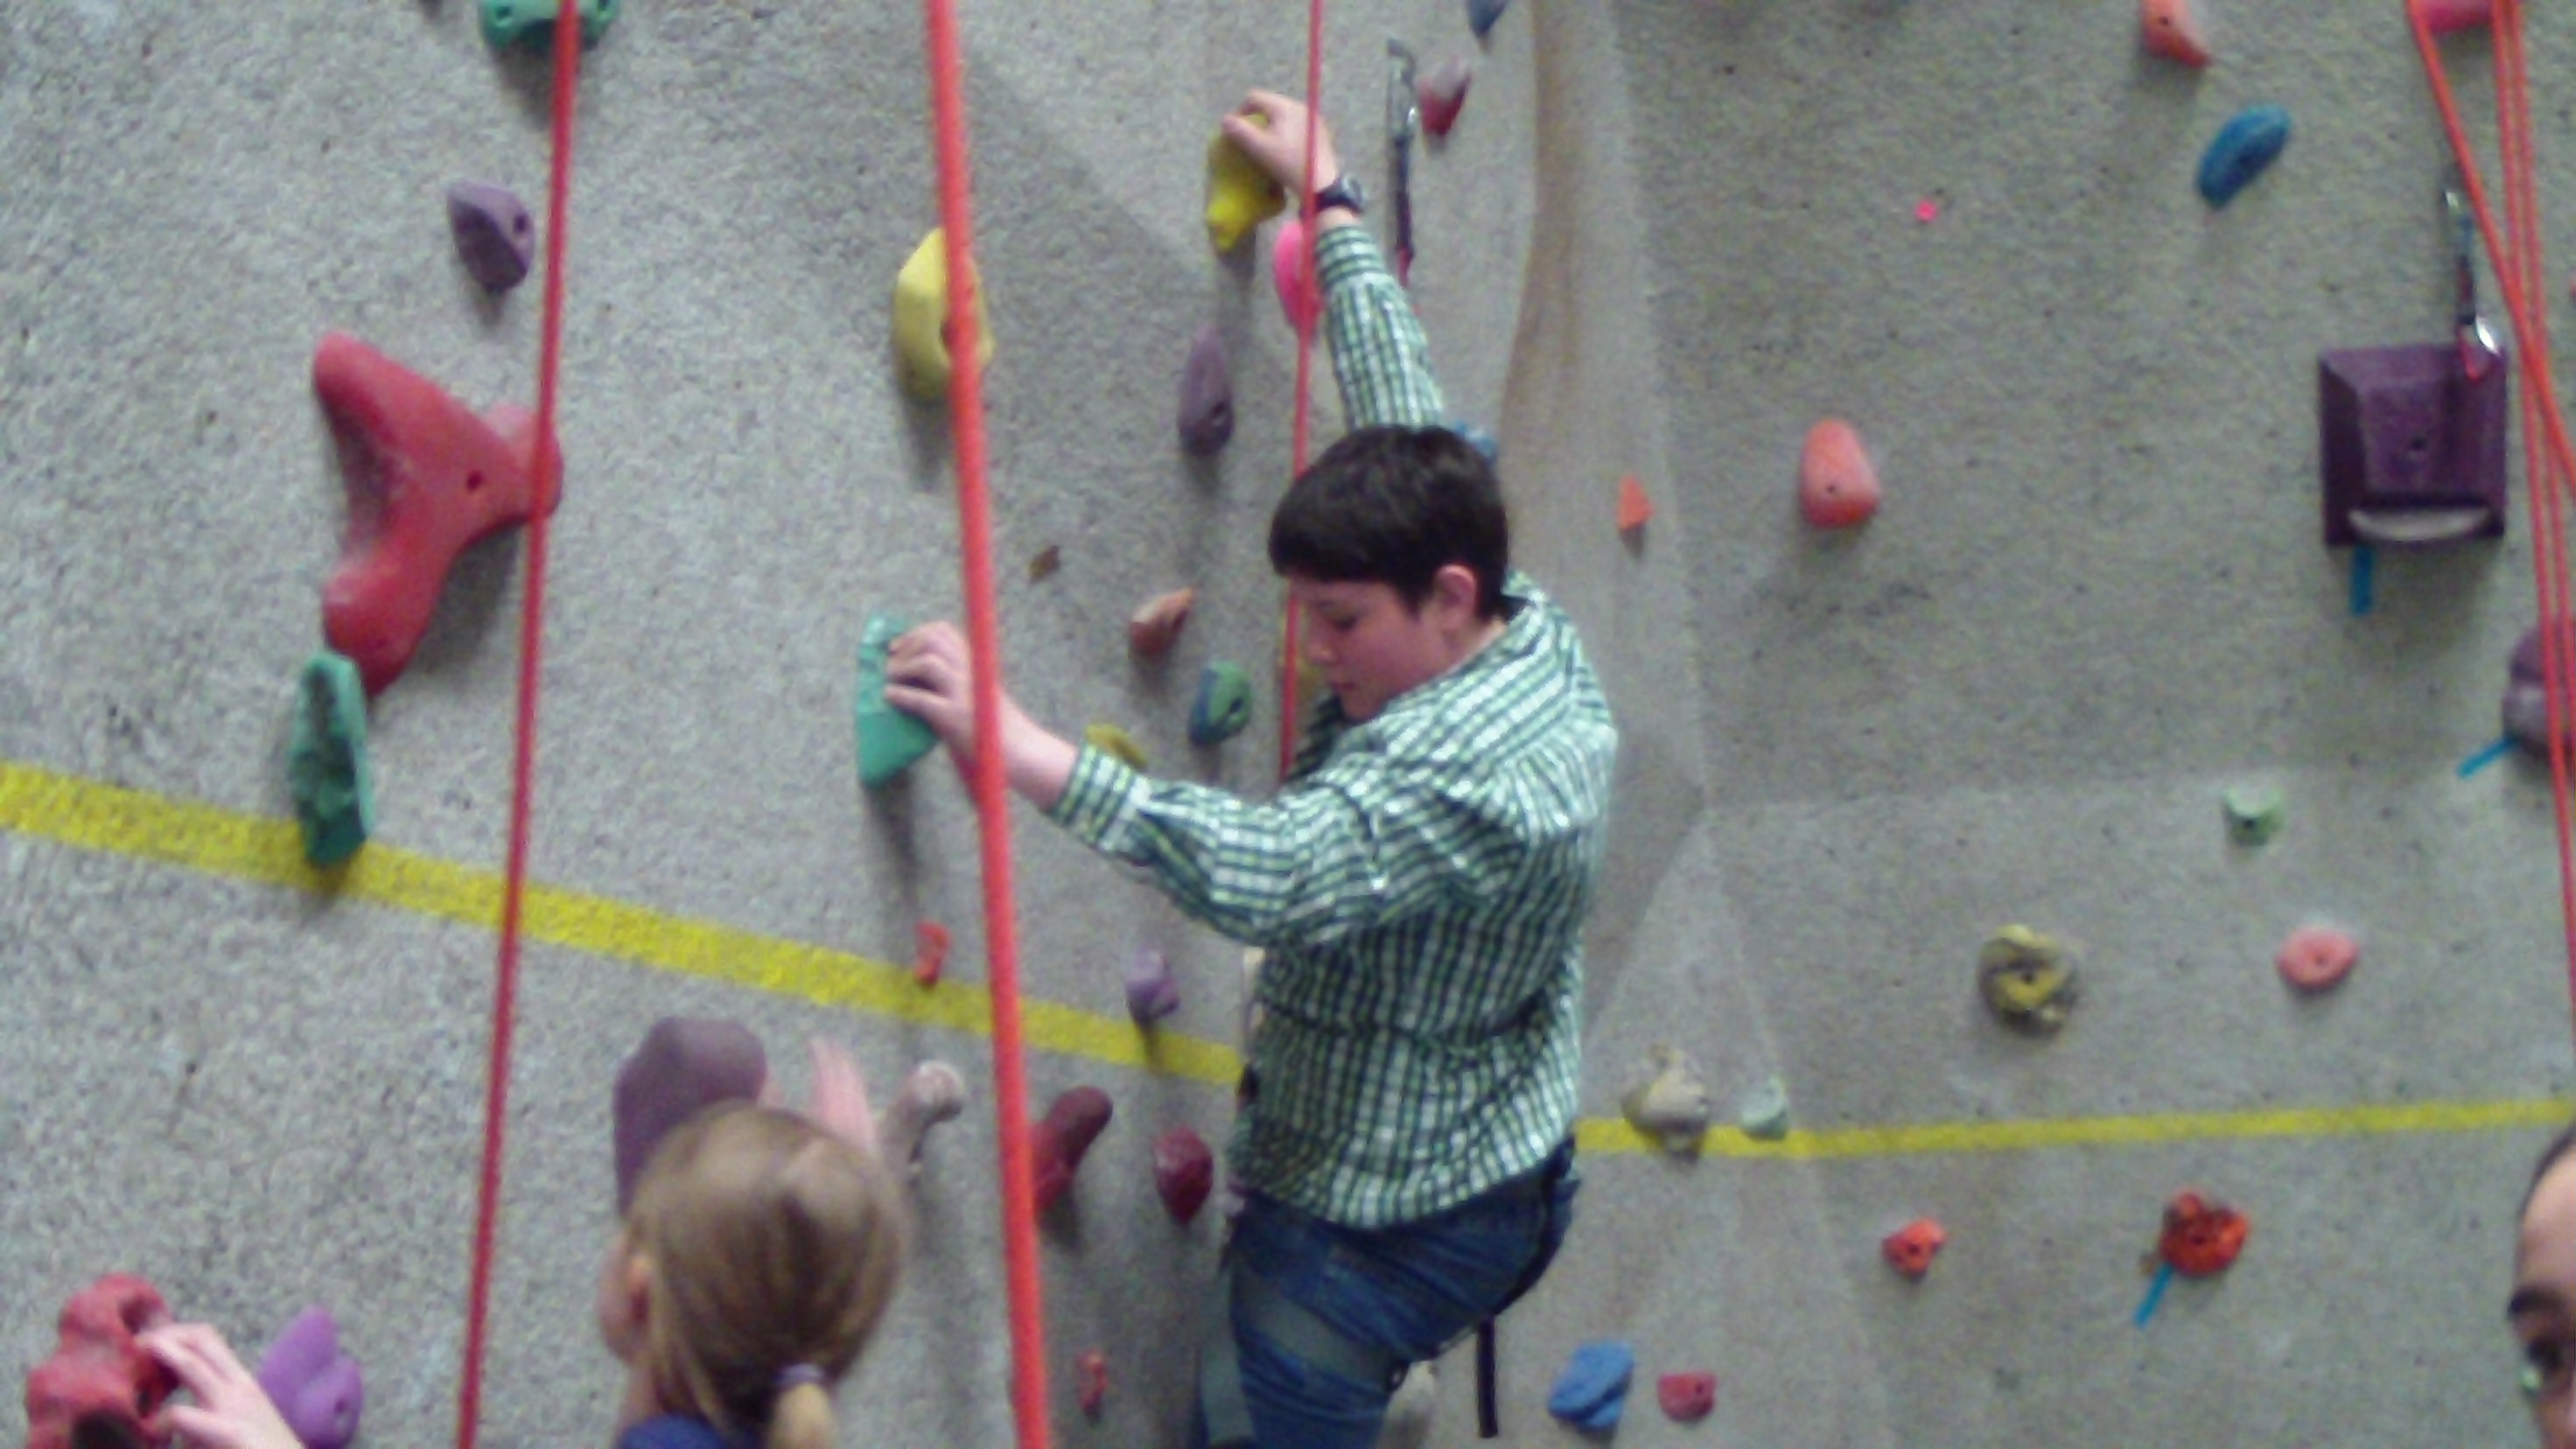 Students enjoyed rock climbing at LSC as part of winter activities program.